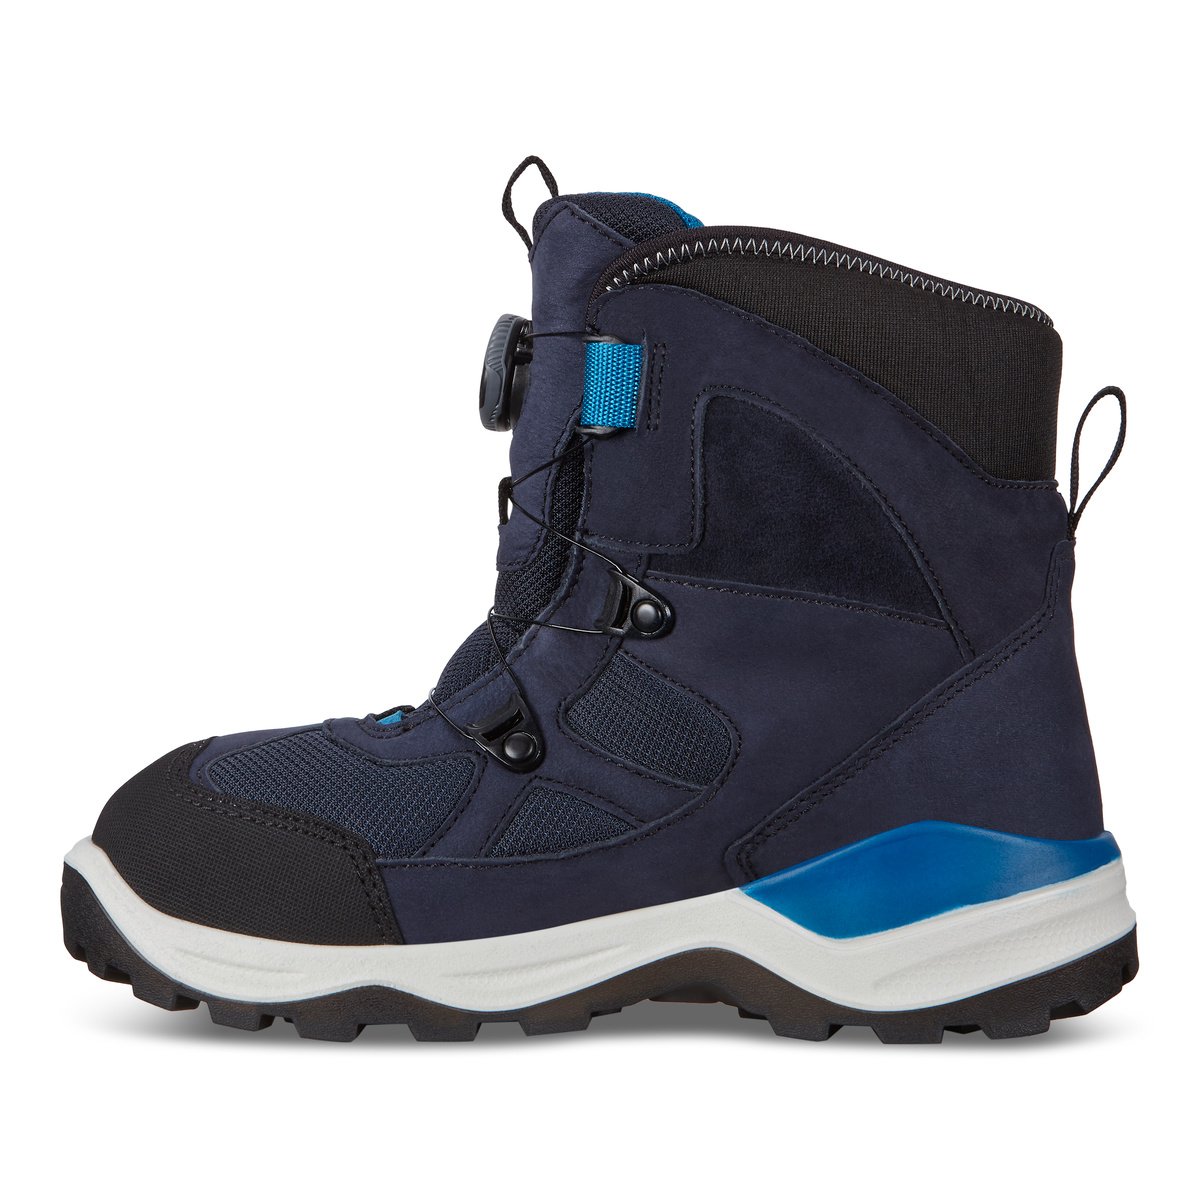 Ботинки Ecco SNOW MOUNTAIN с BOA (синий) 93037 710292 51237 купить в Москвена Диномама.ру